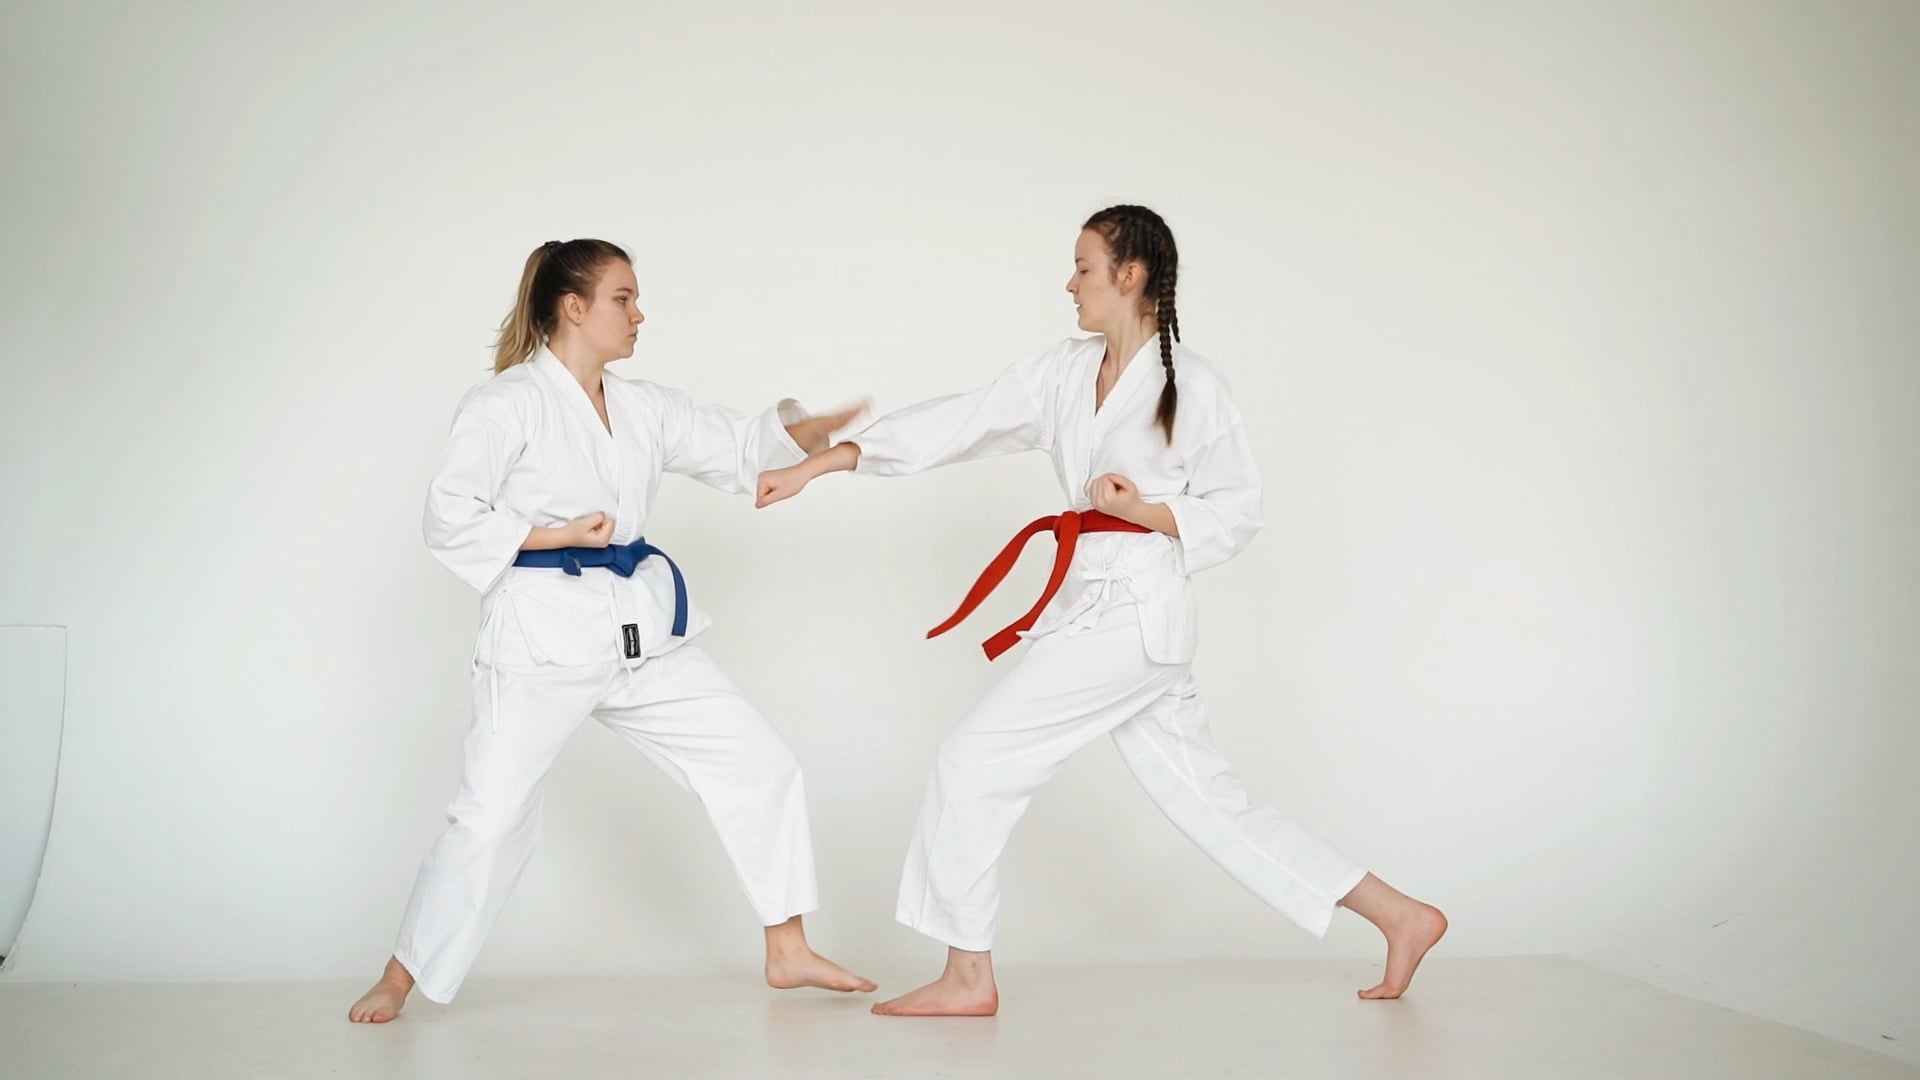 Karate: Kata training, Red belt vs. blue belt, Competitive combat sports. 1920x1080 Full HD Wallpaper.